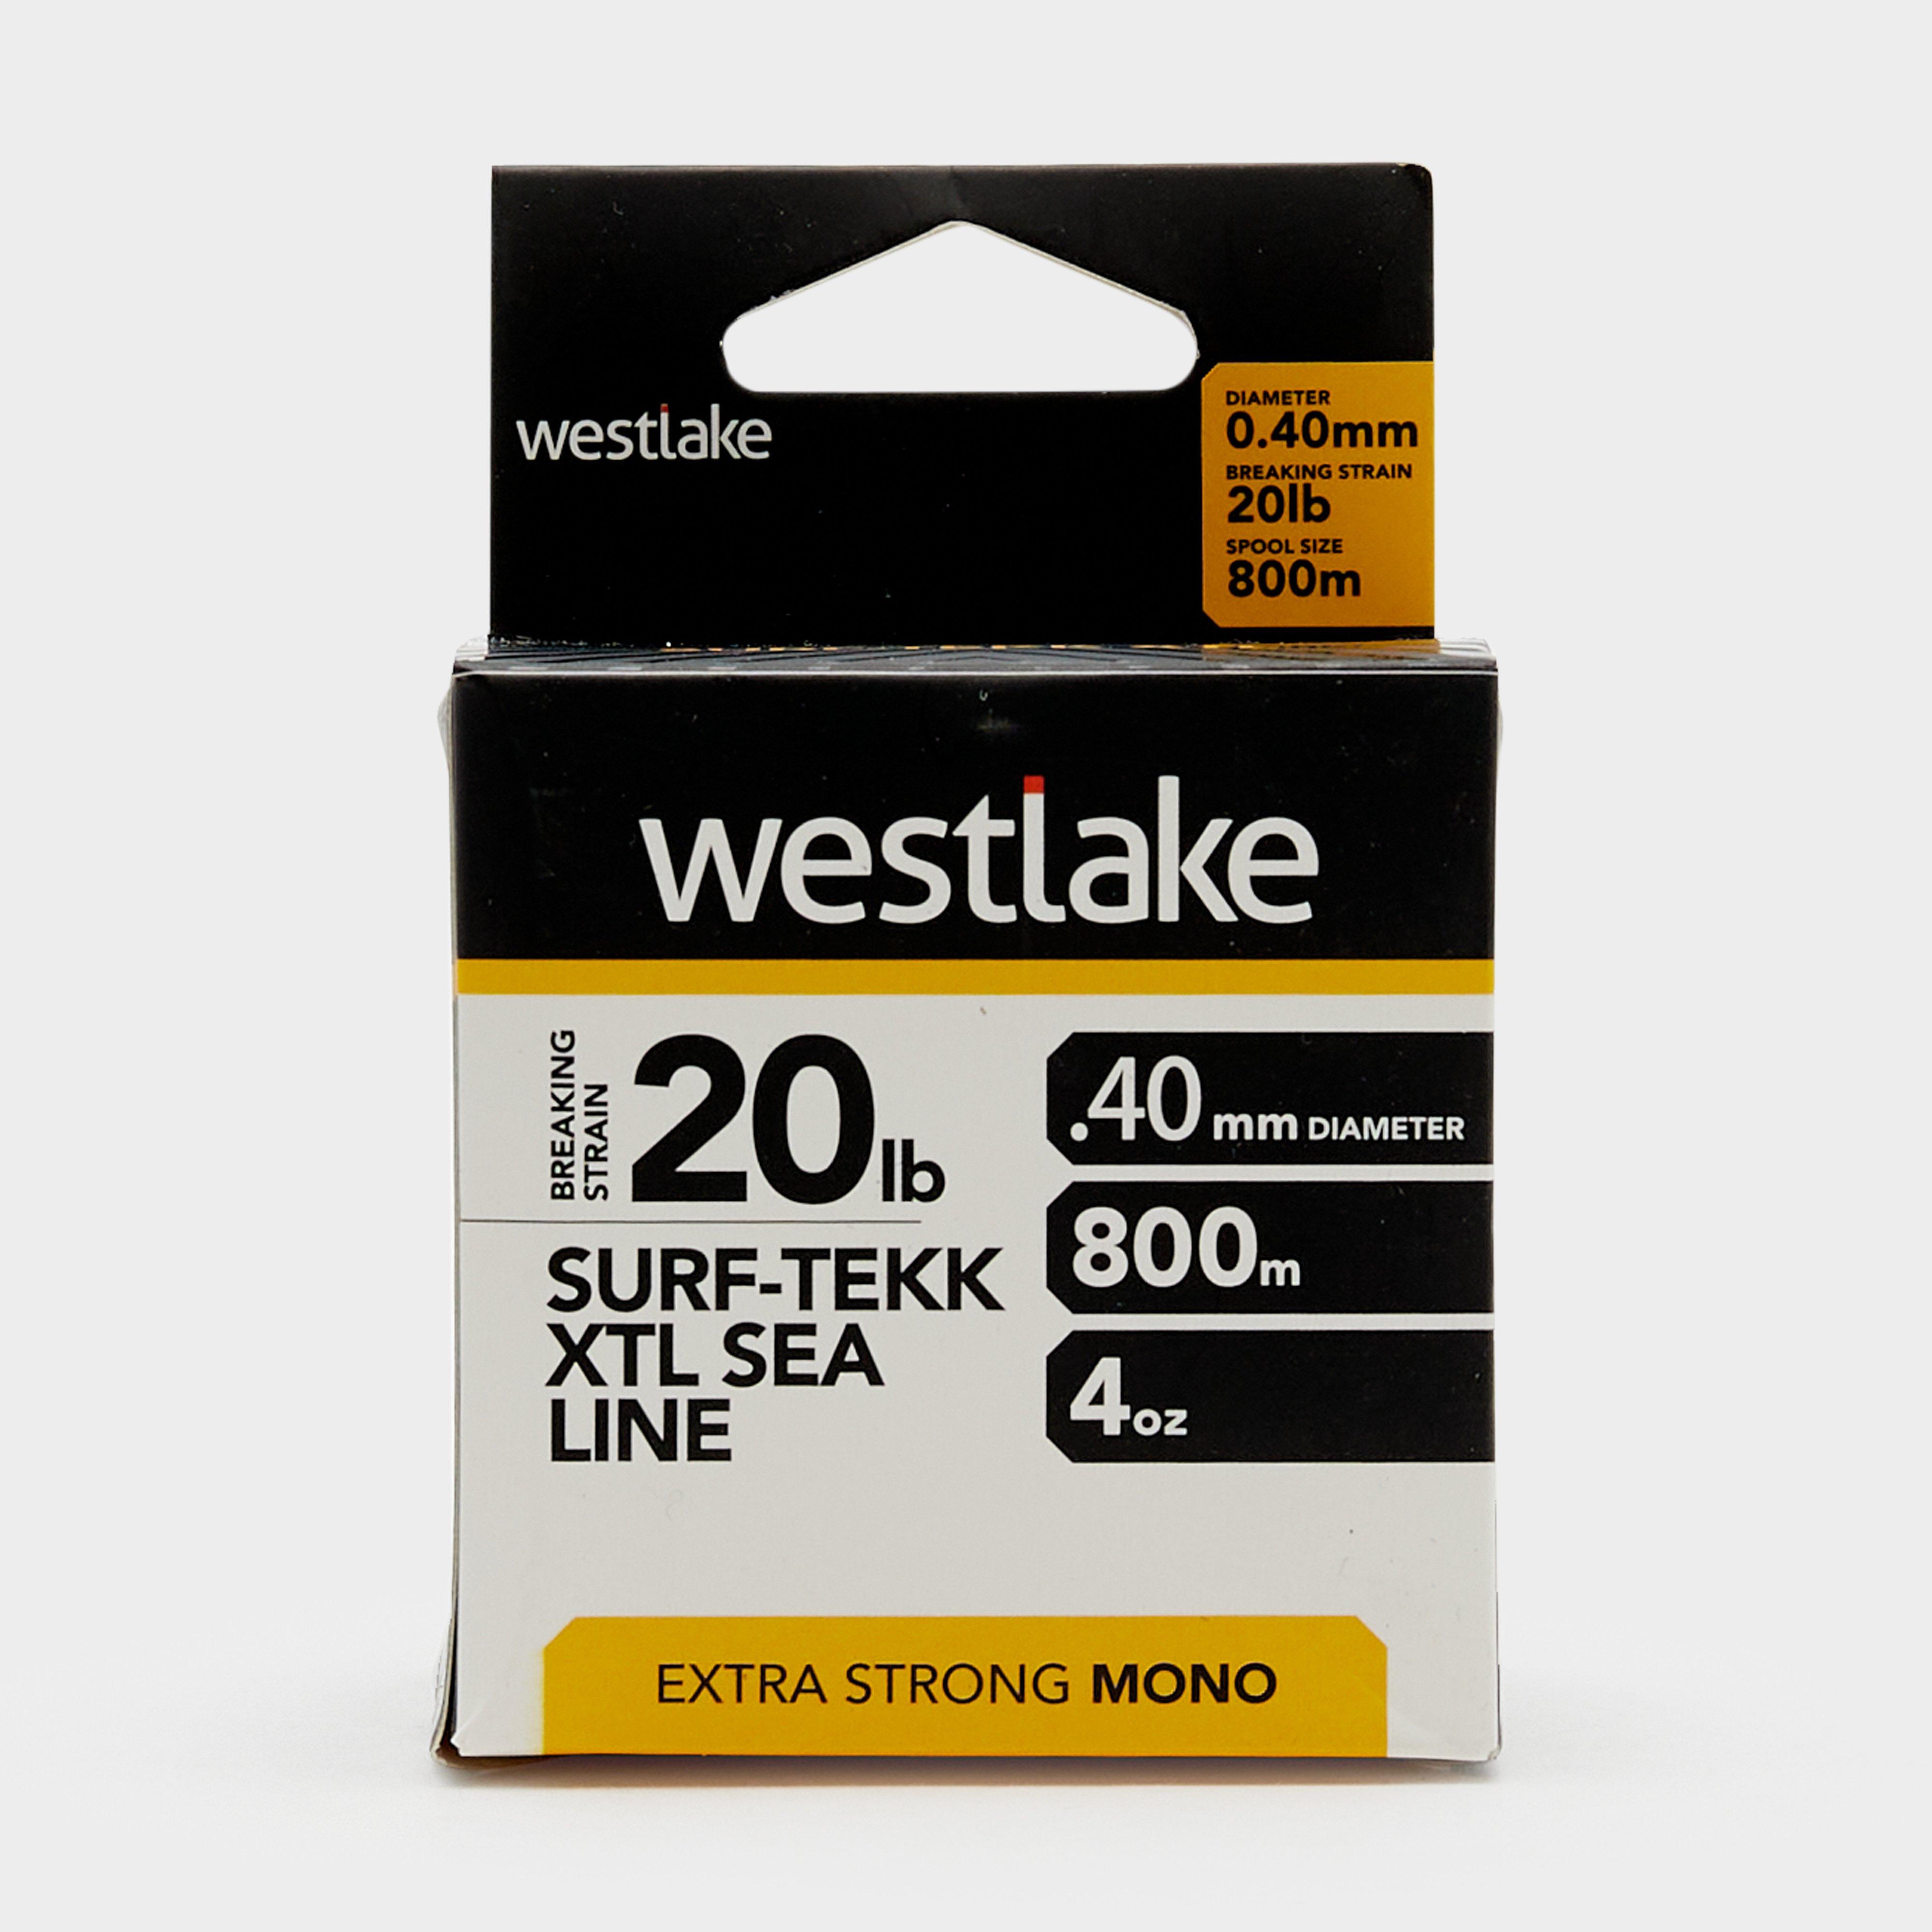 Westlake Surf-tekk Xtl Sea Line 20lb 4oz - Multi/4oz  Multi/4oz